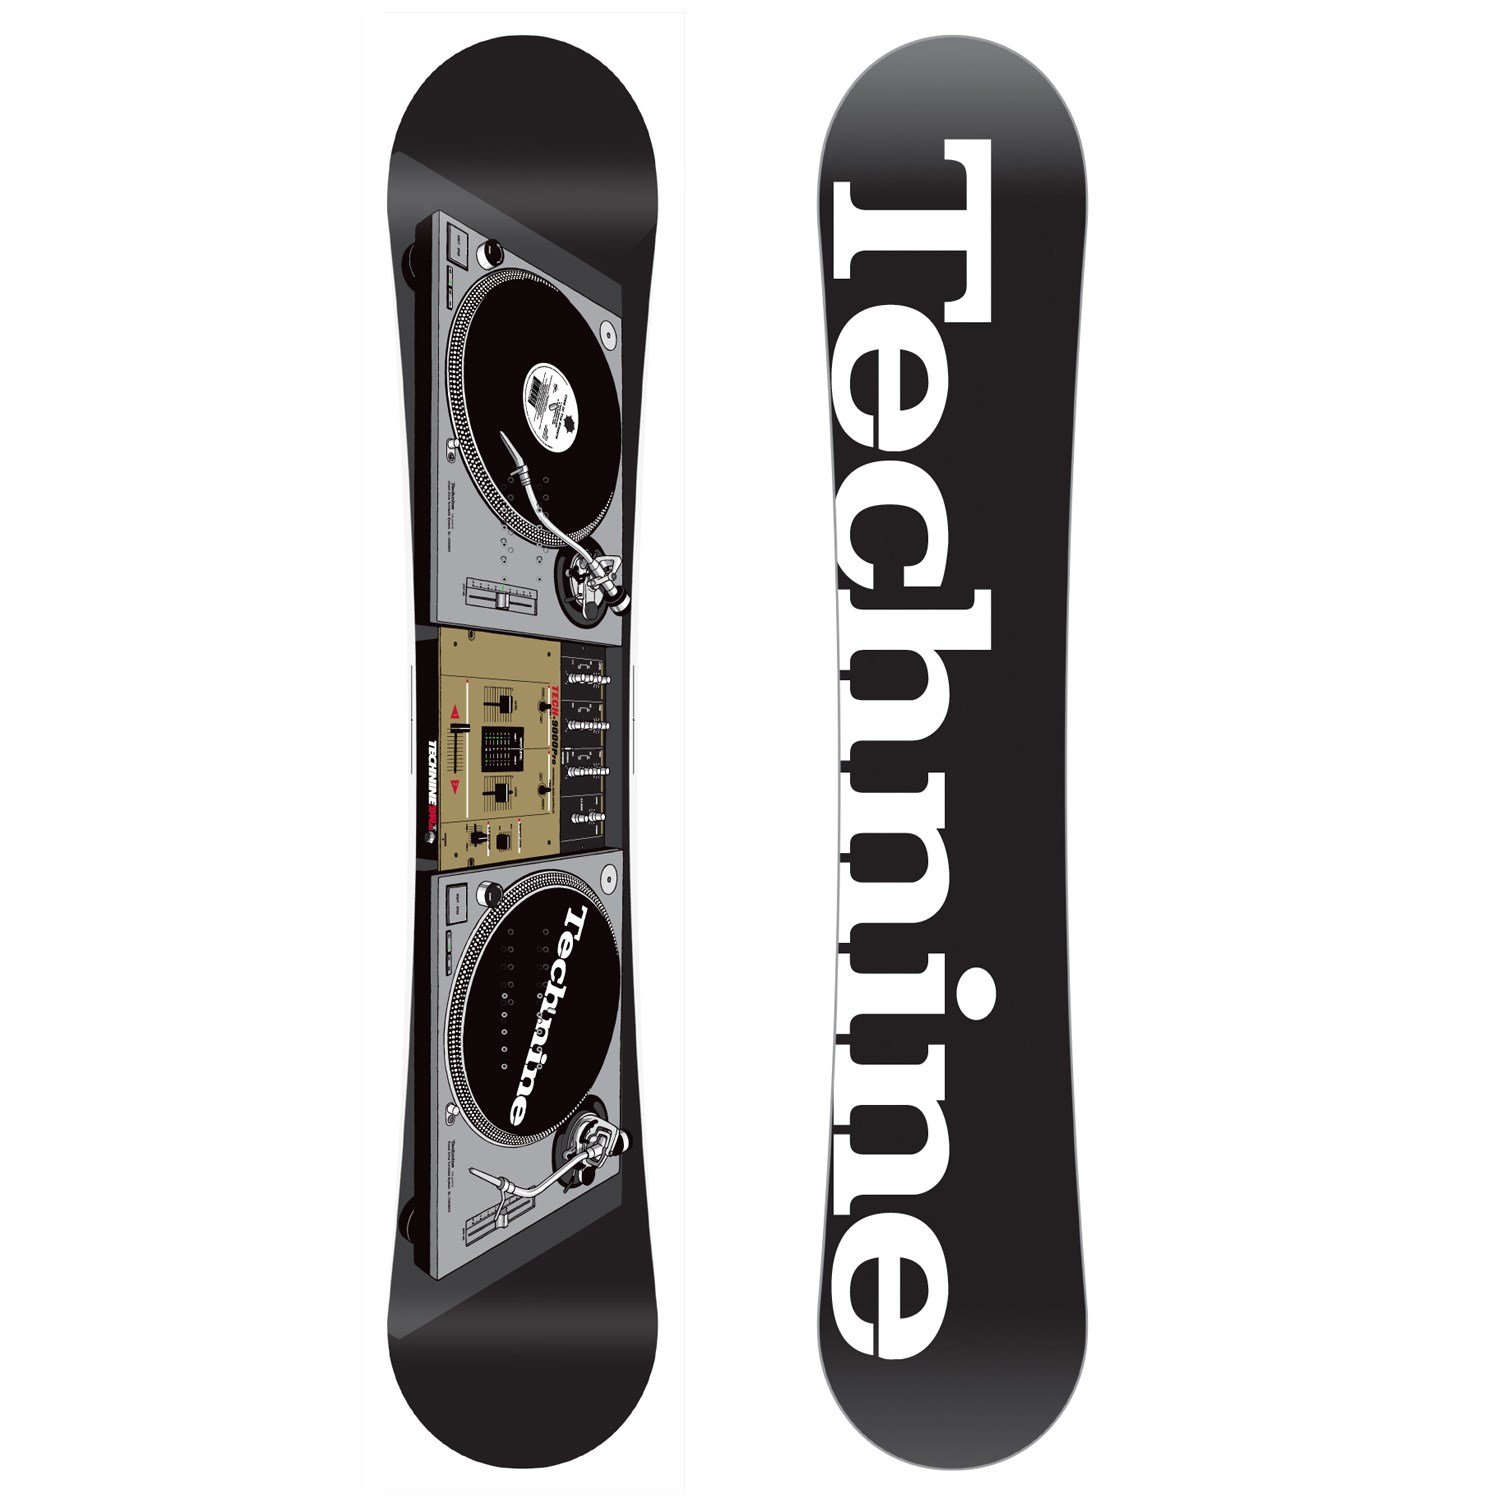 Tech Nine Mass Appeal (Turntables) Snowboard 2012 | evo